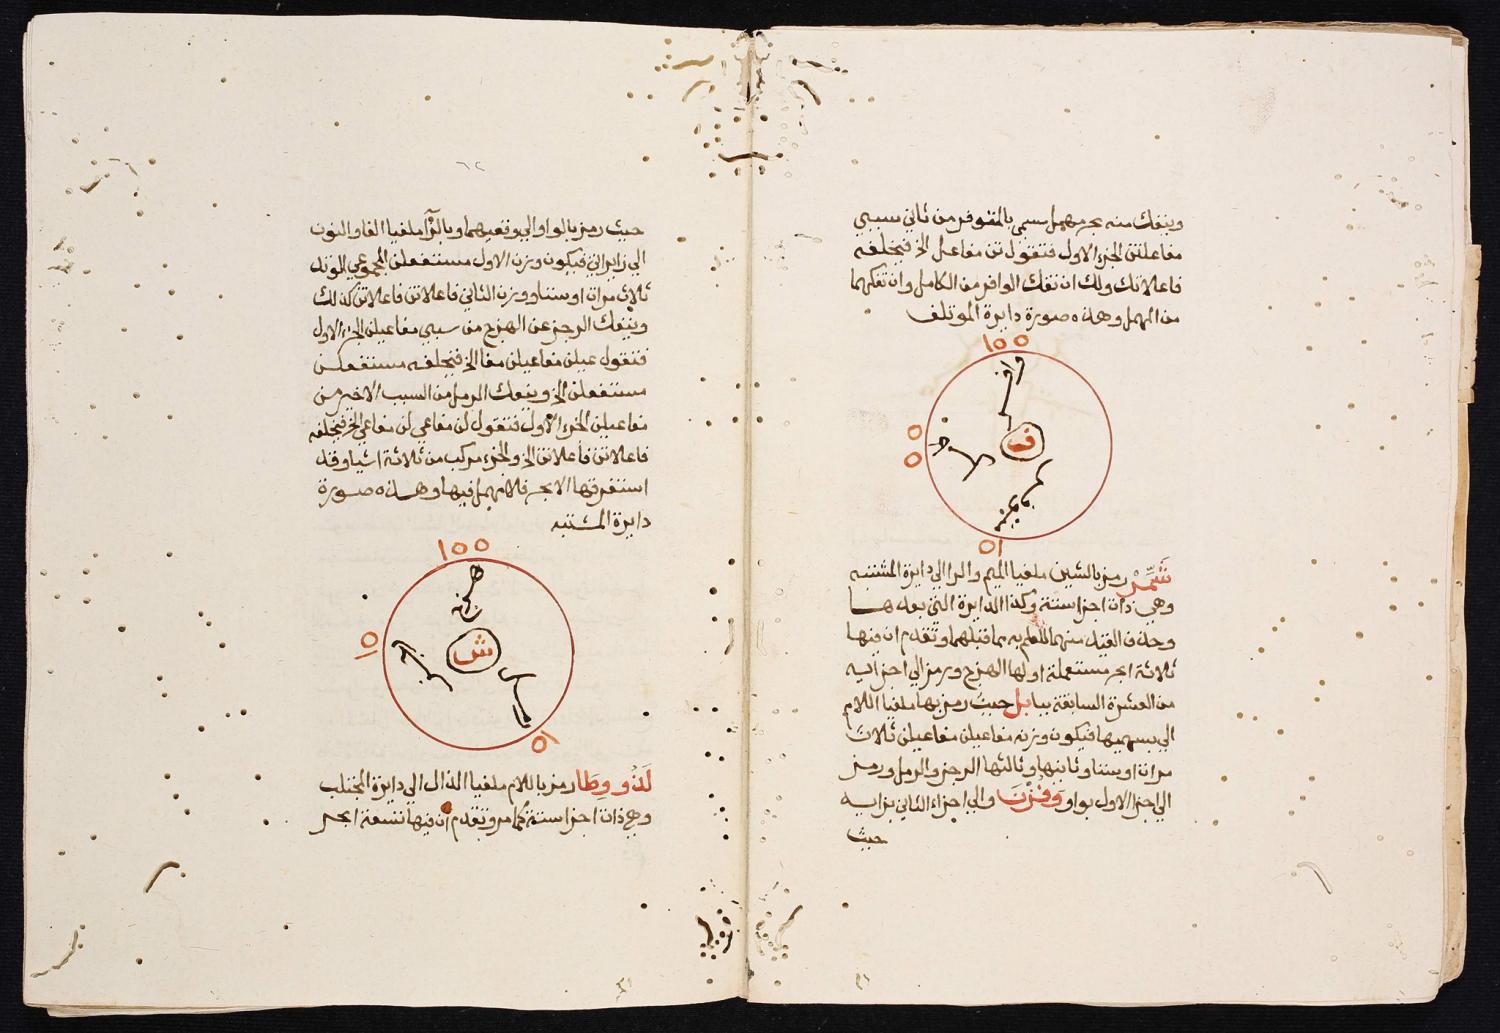 Manuscript dated 1793, titled Fath Rabb al-bariyya bi-sharh al-Qasida al-Khazrajiyya, from the Issaf Nashashibi Library